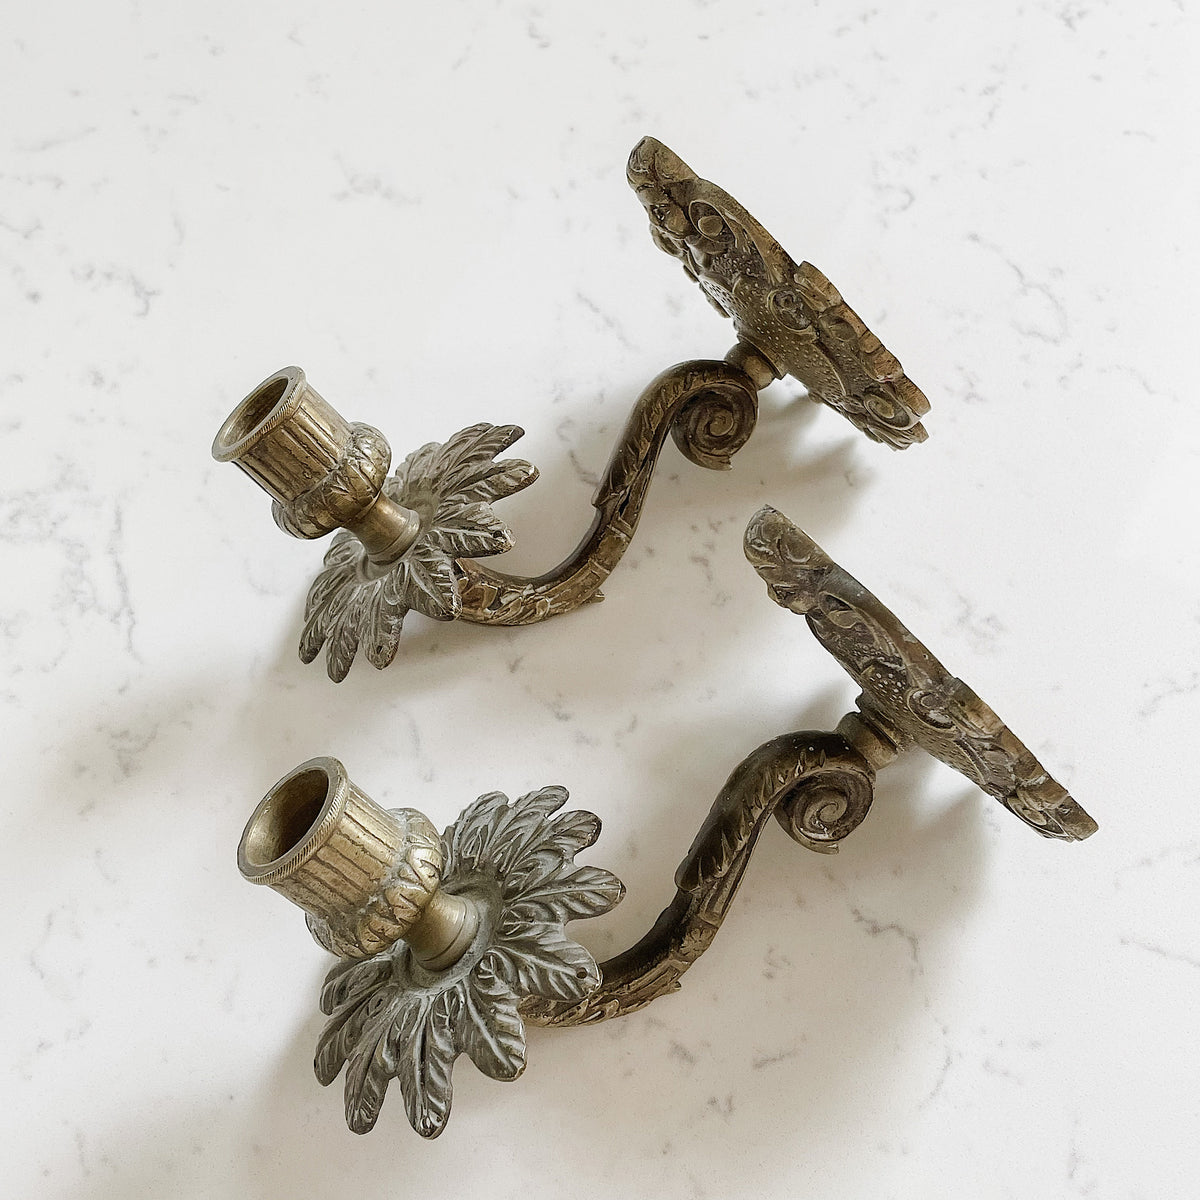 Pair of Antique Brass Sconces